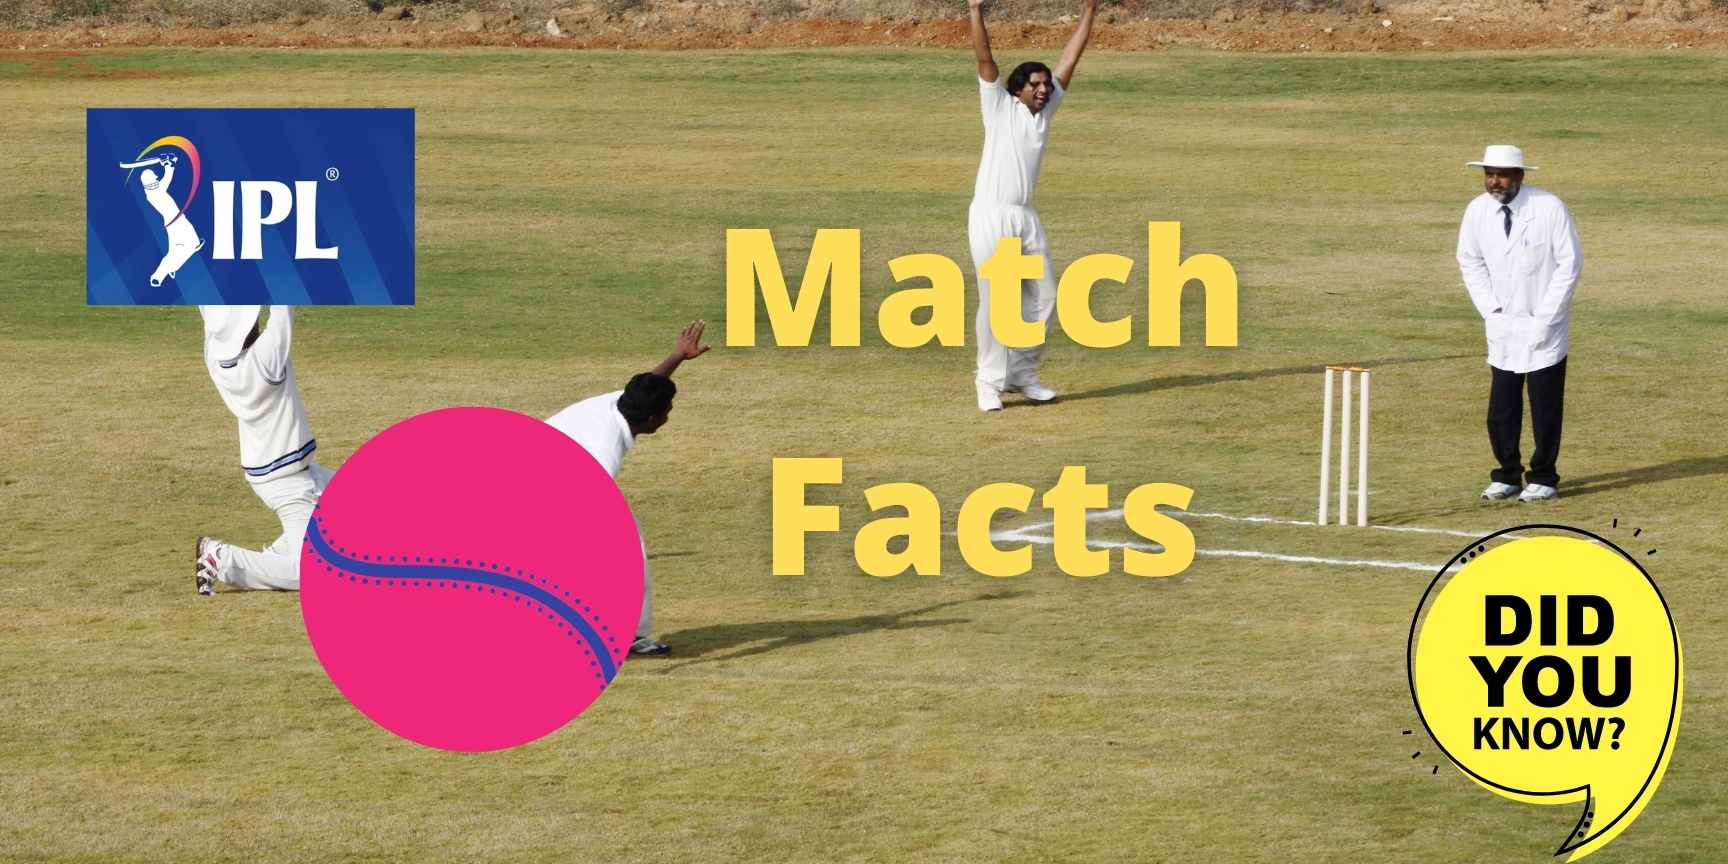 Match facts